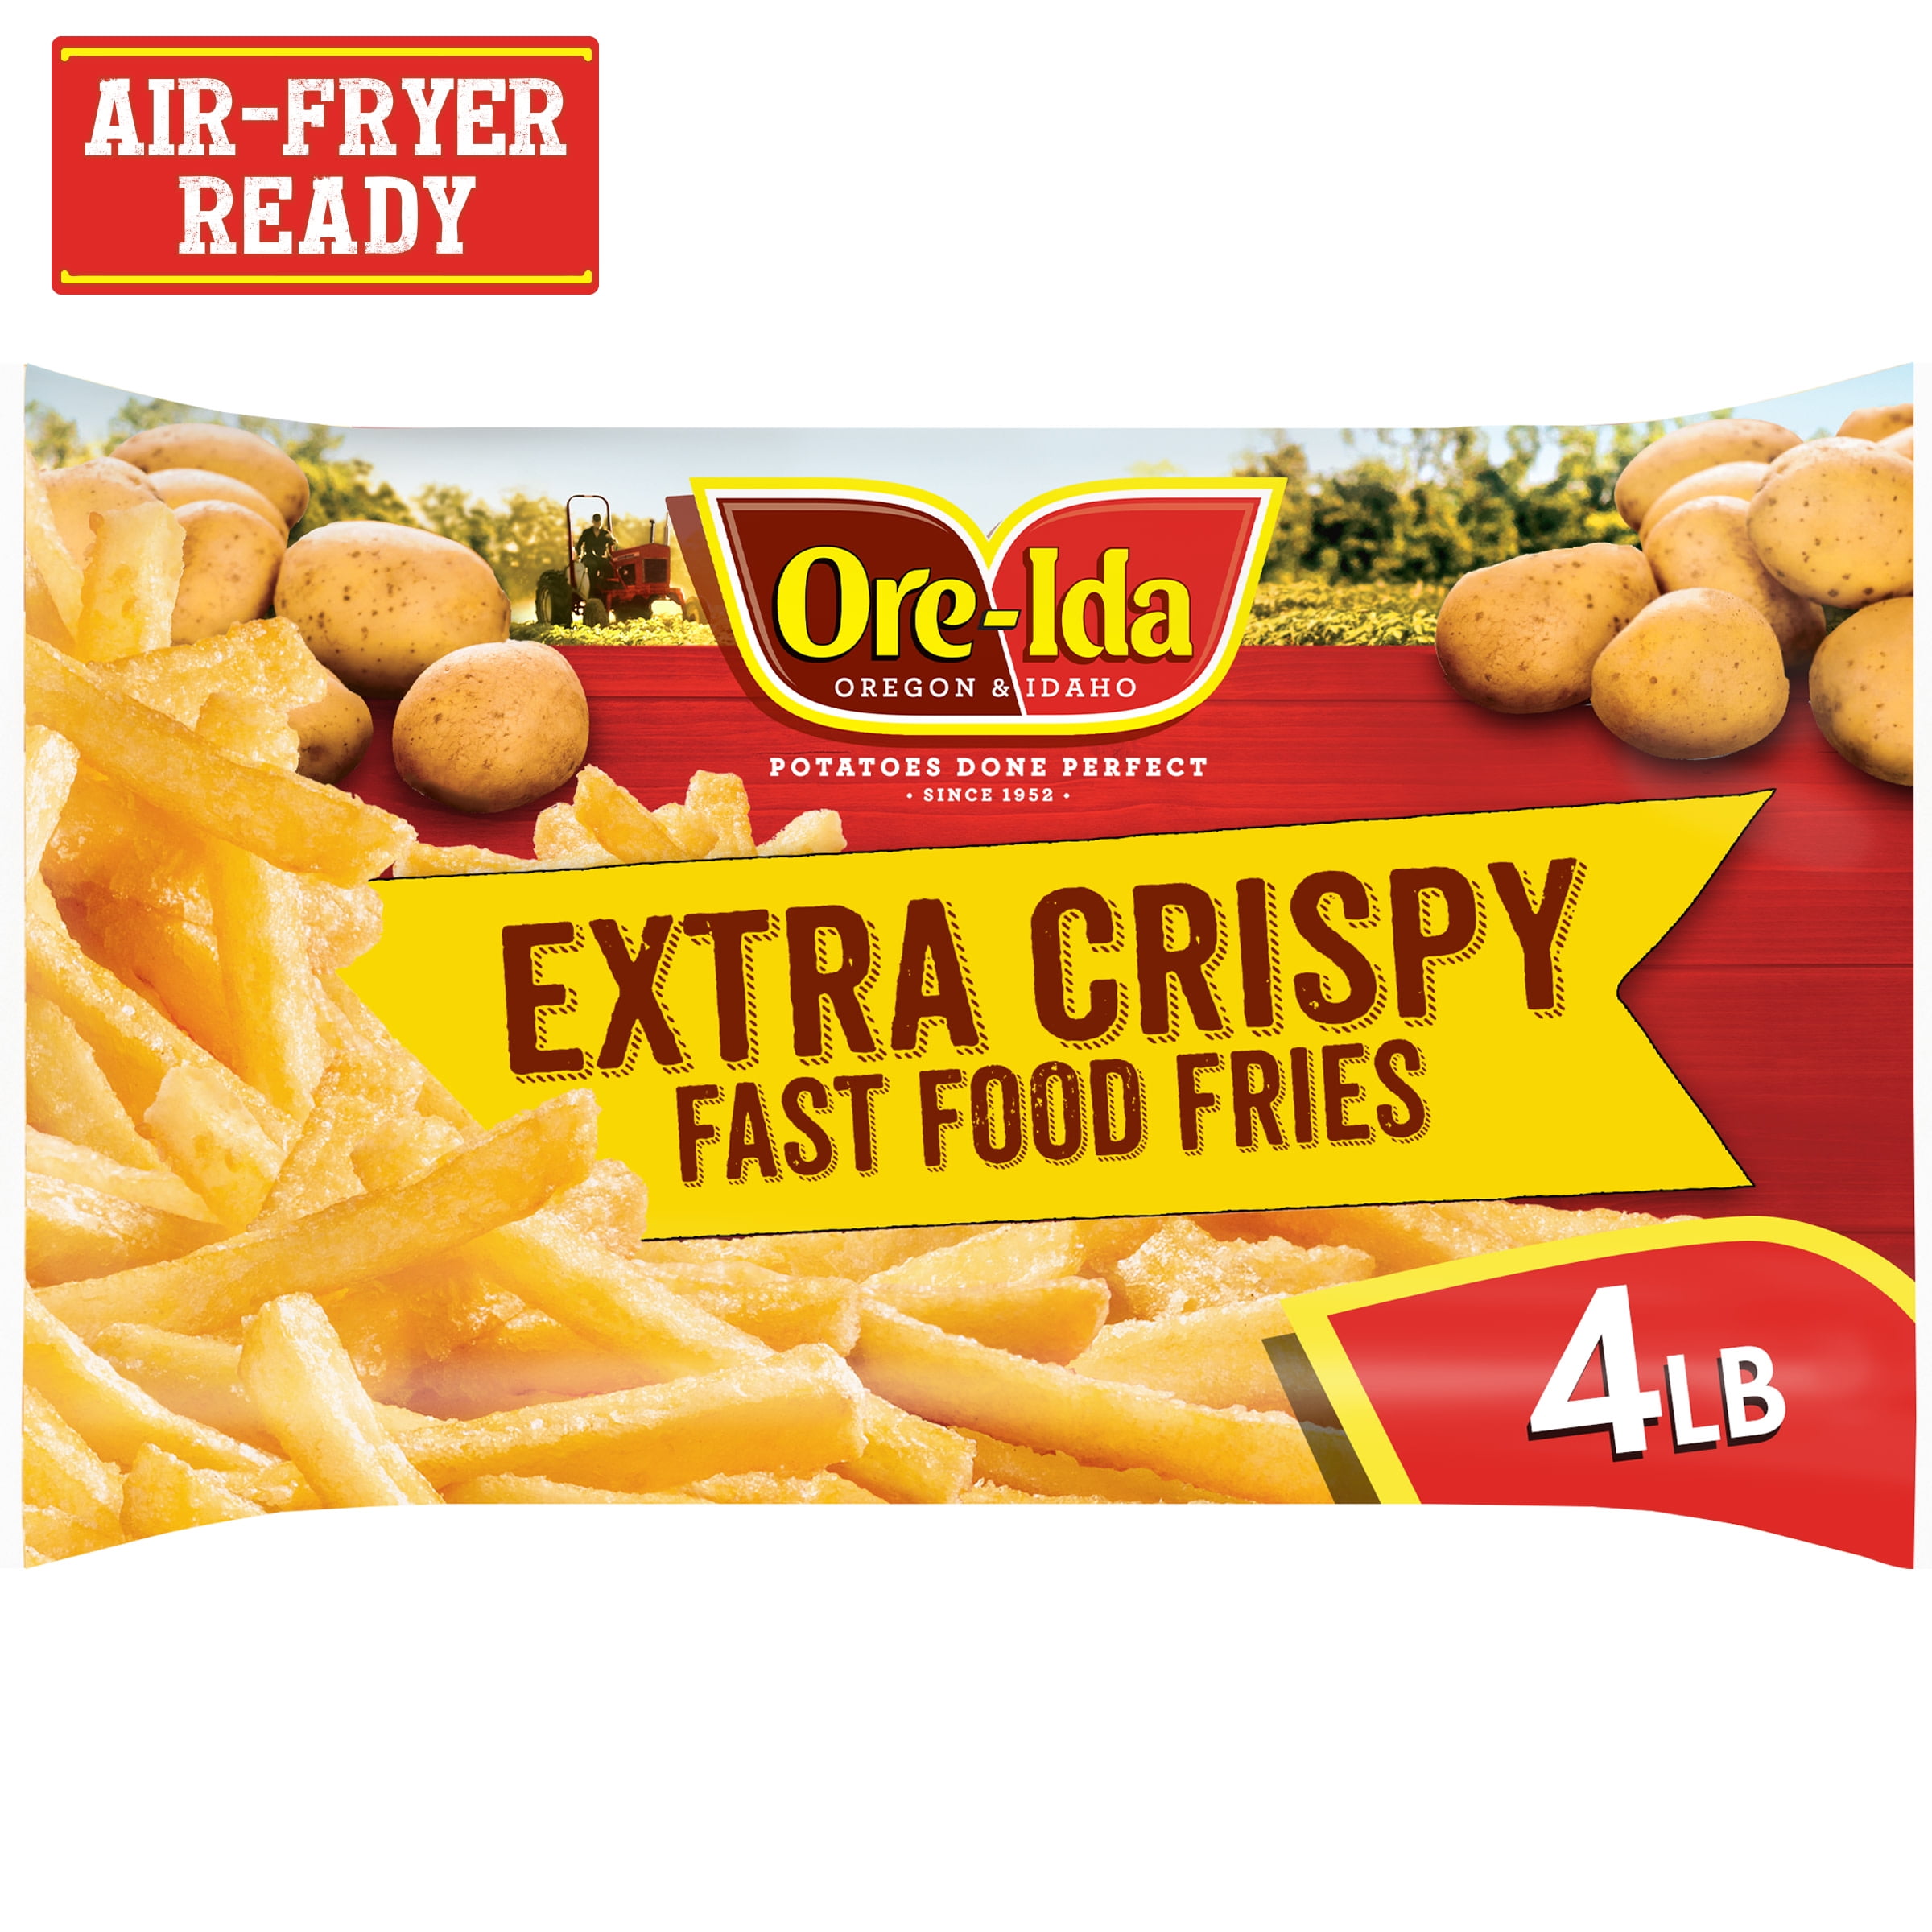 Ore-Ida Golden French Fries, French Fried Frozen Potatoes, 32 oz